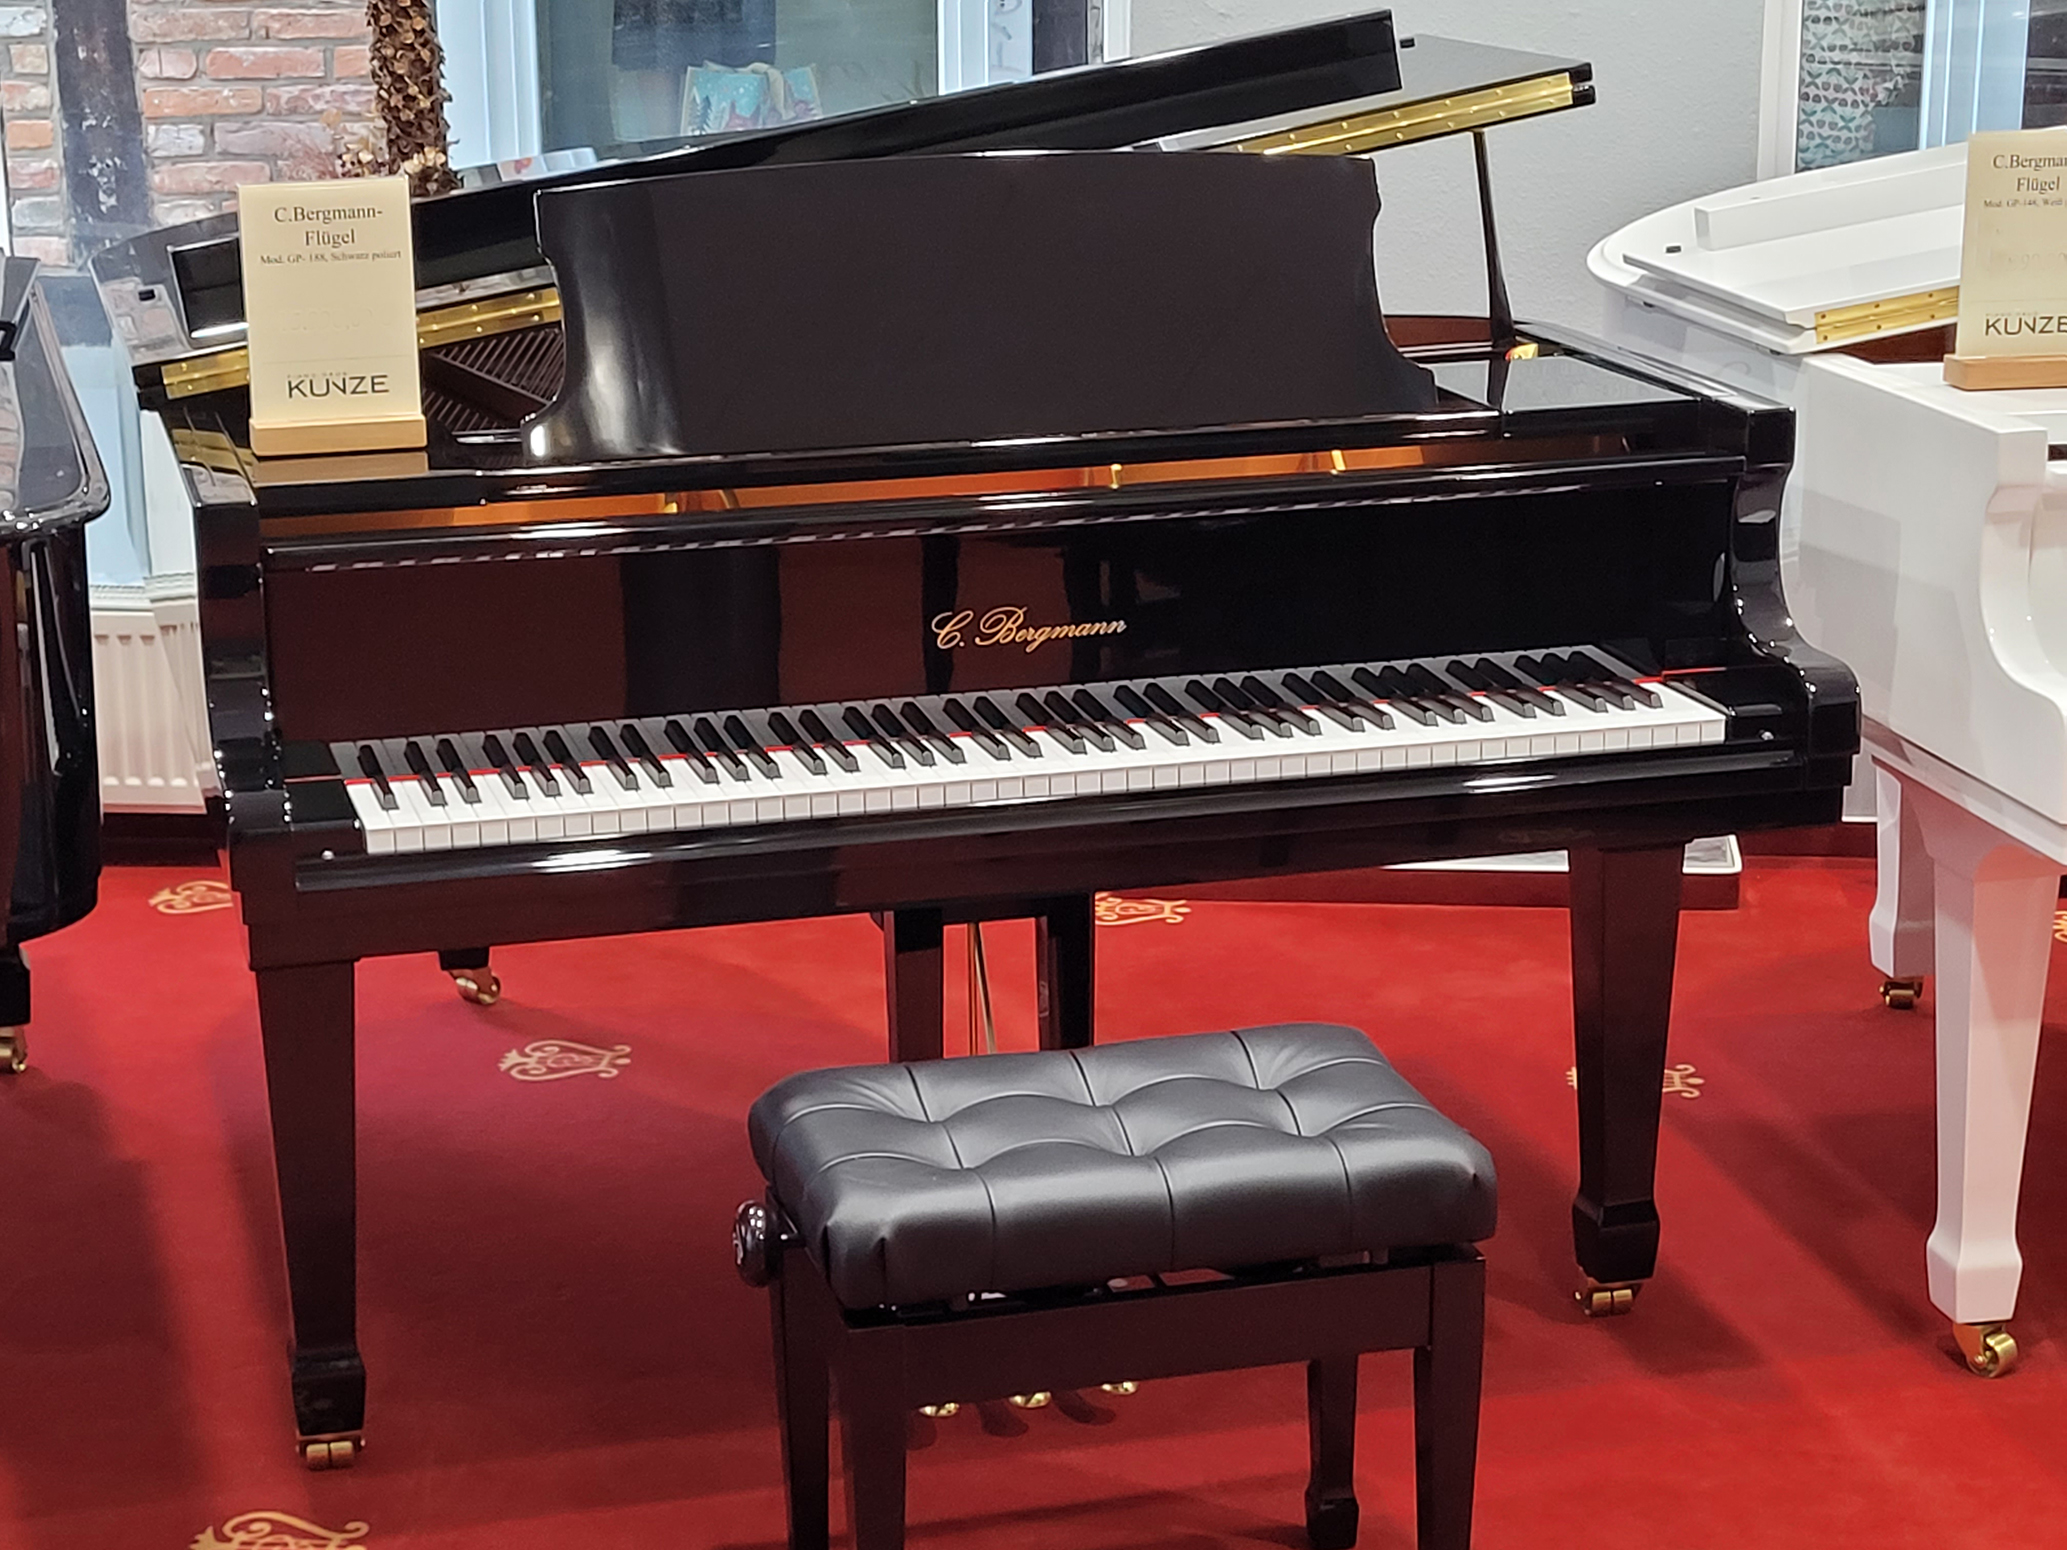 Piano-Haus Kunze lässt Musikträume wahr werden